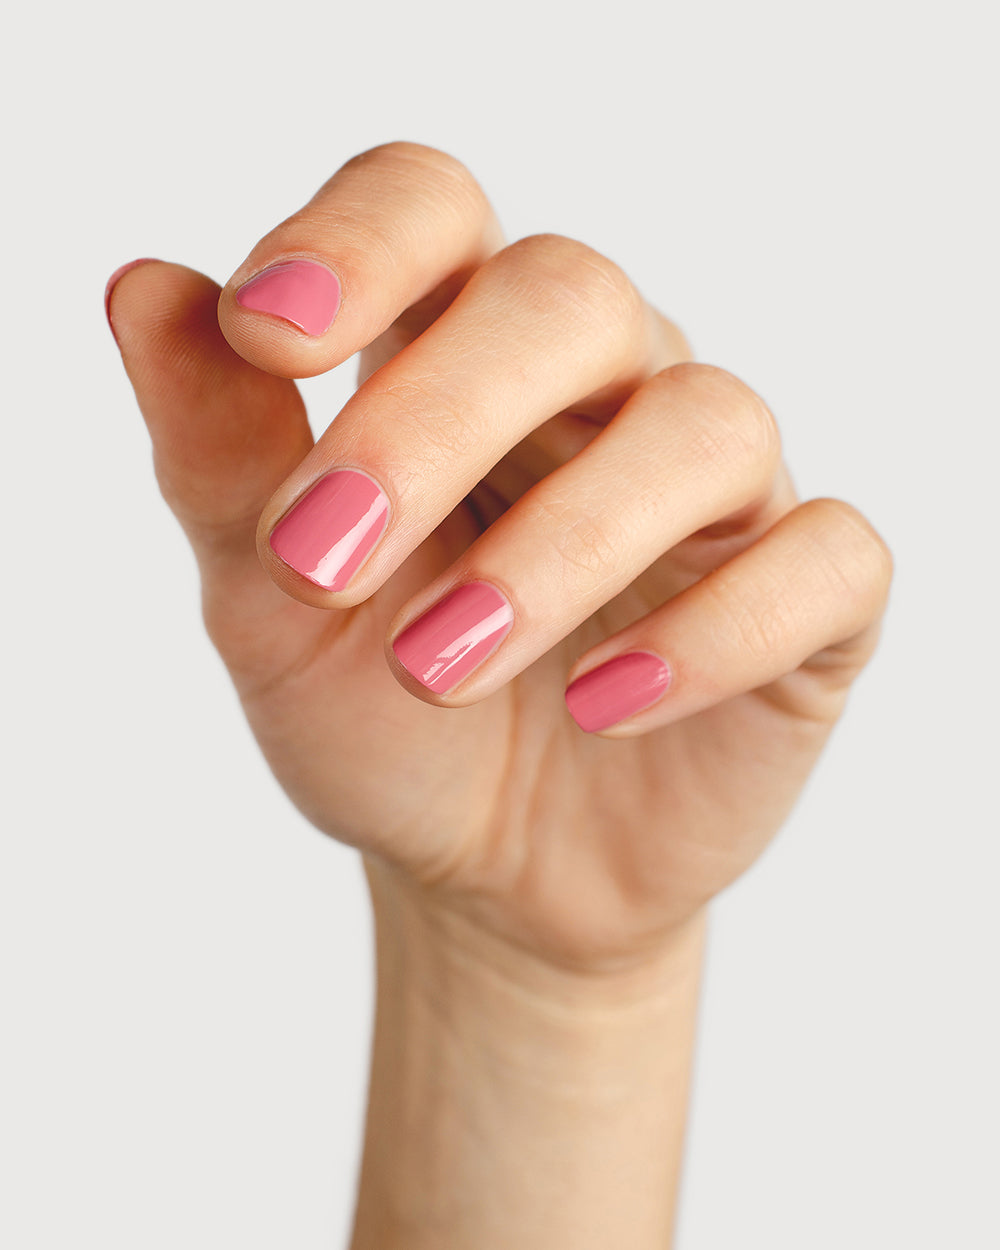 midtone pink nail polish hand swatch on fair skin tone